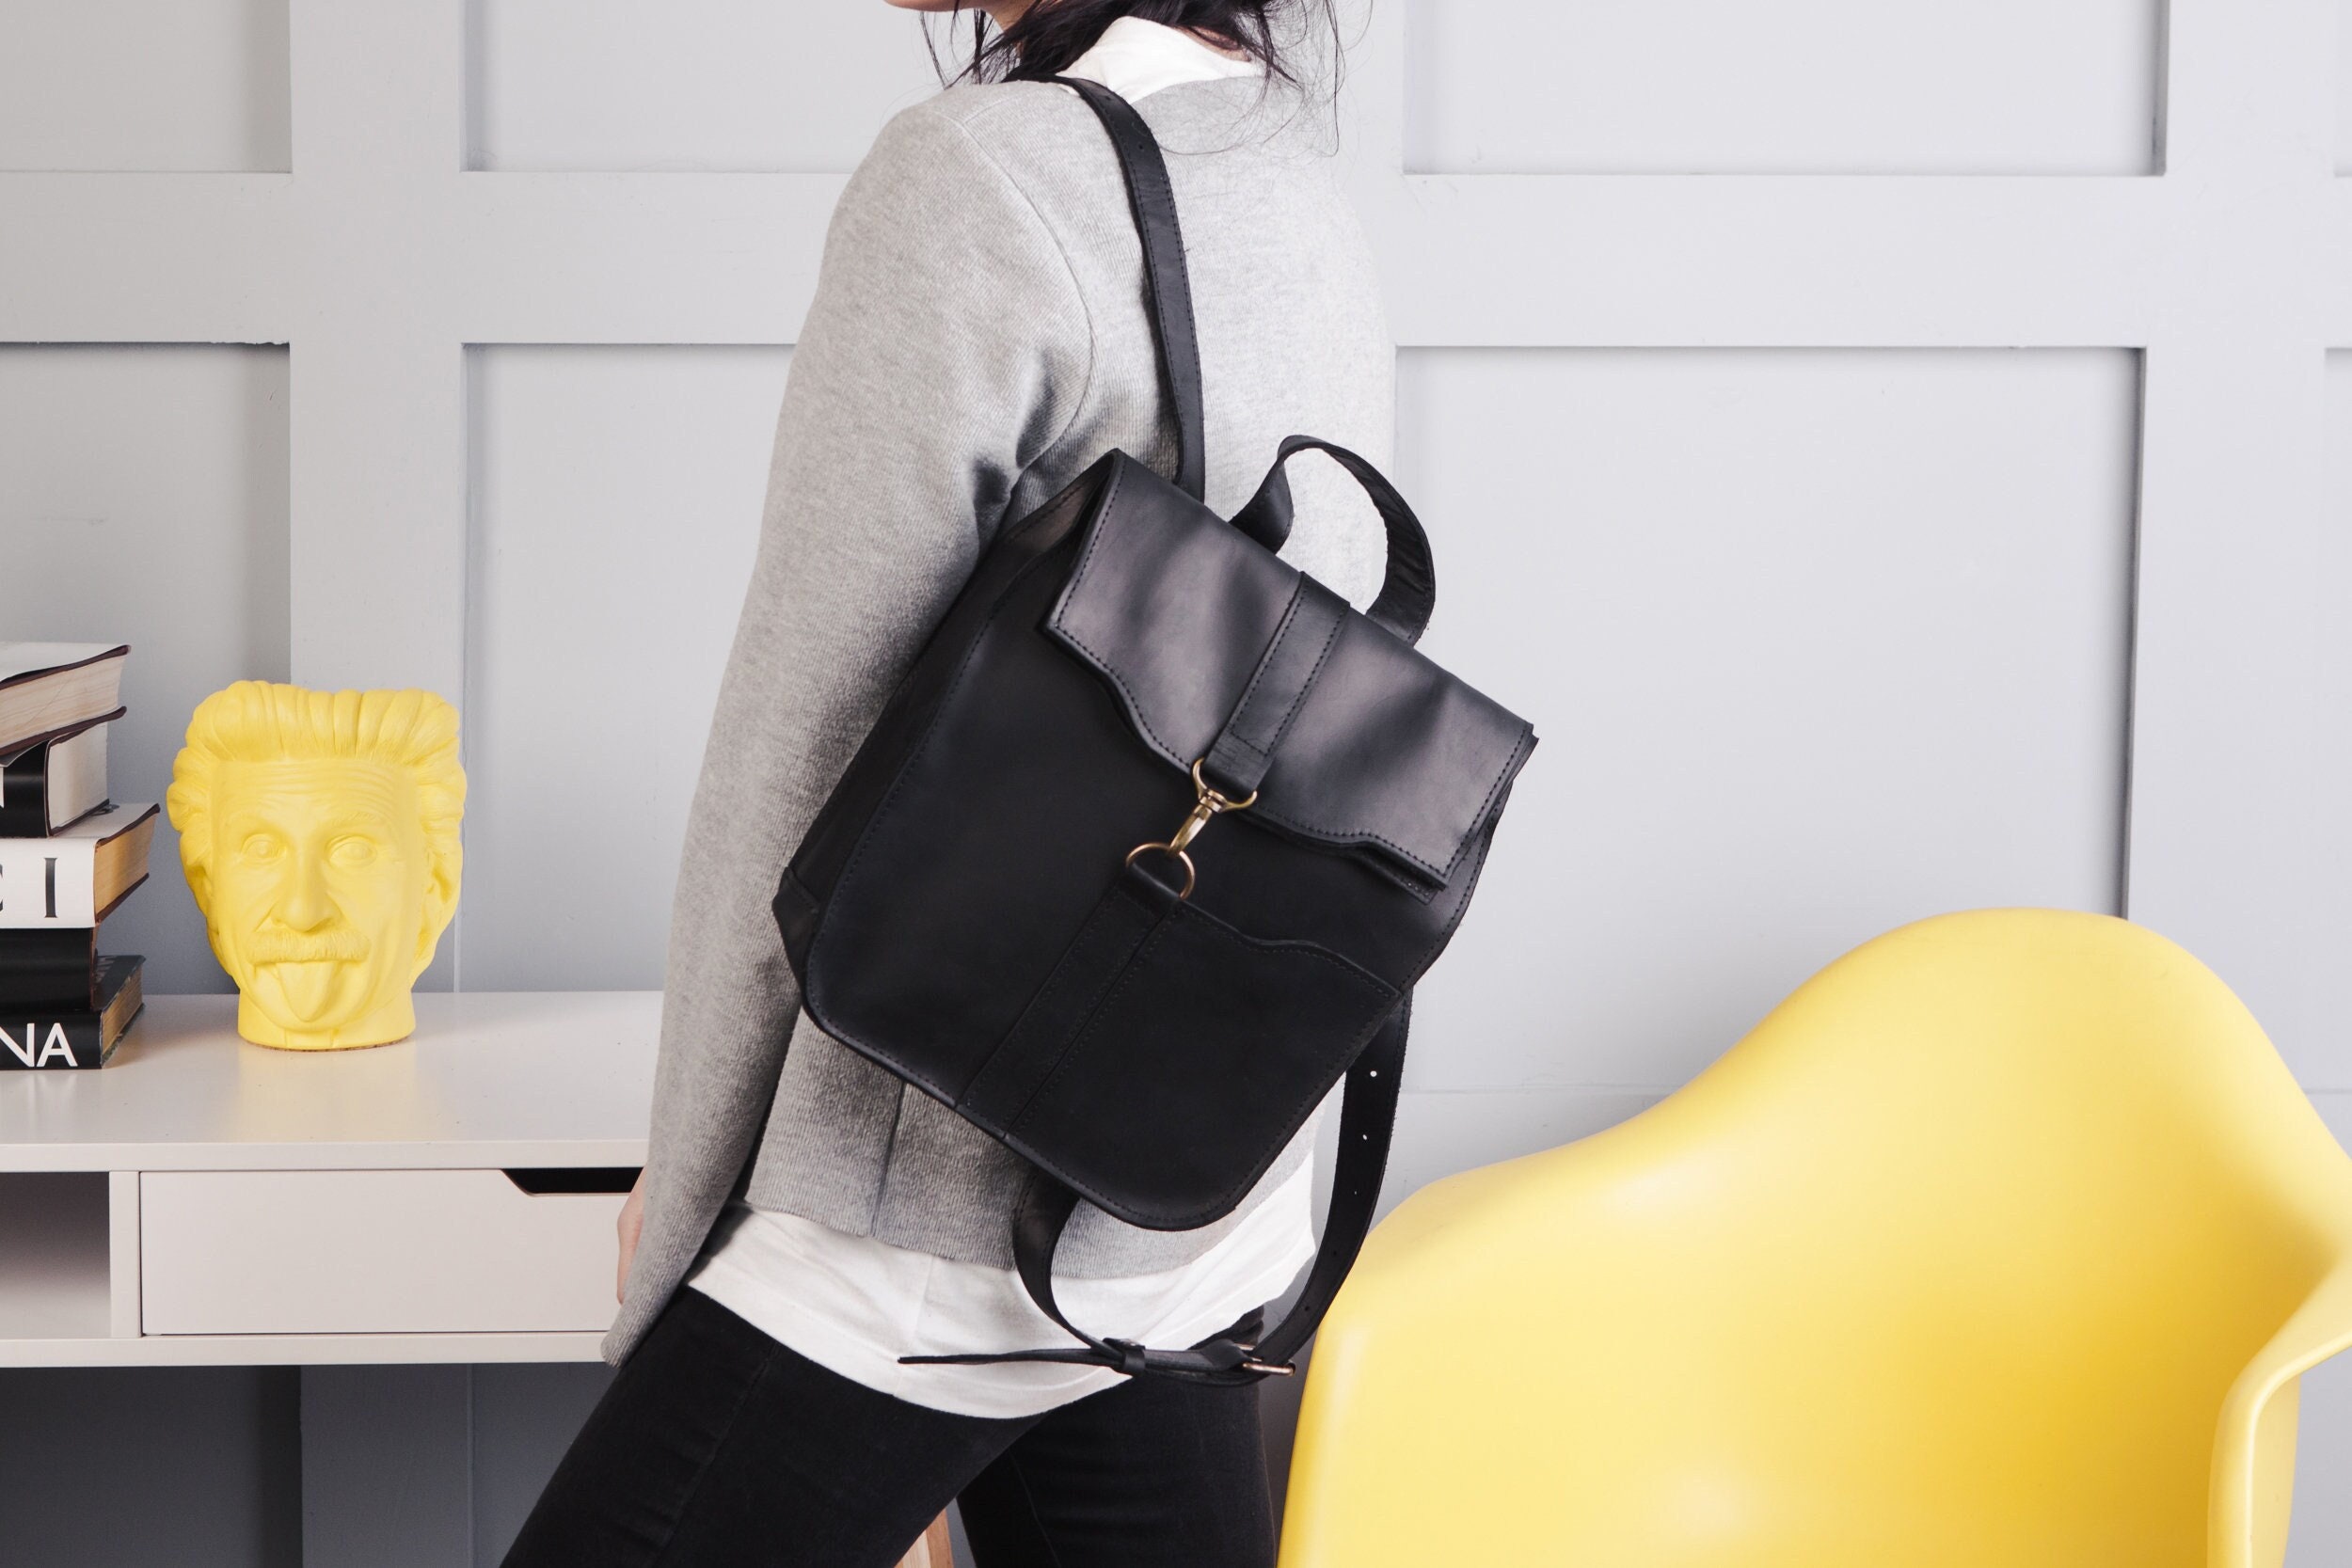 LYingDa Fashion Printed Women's Small Backpack Large Capacity